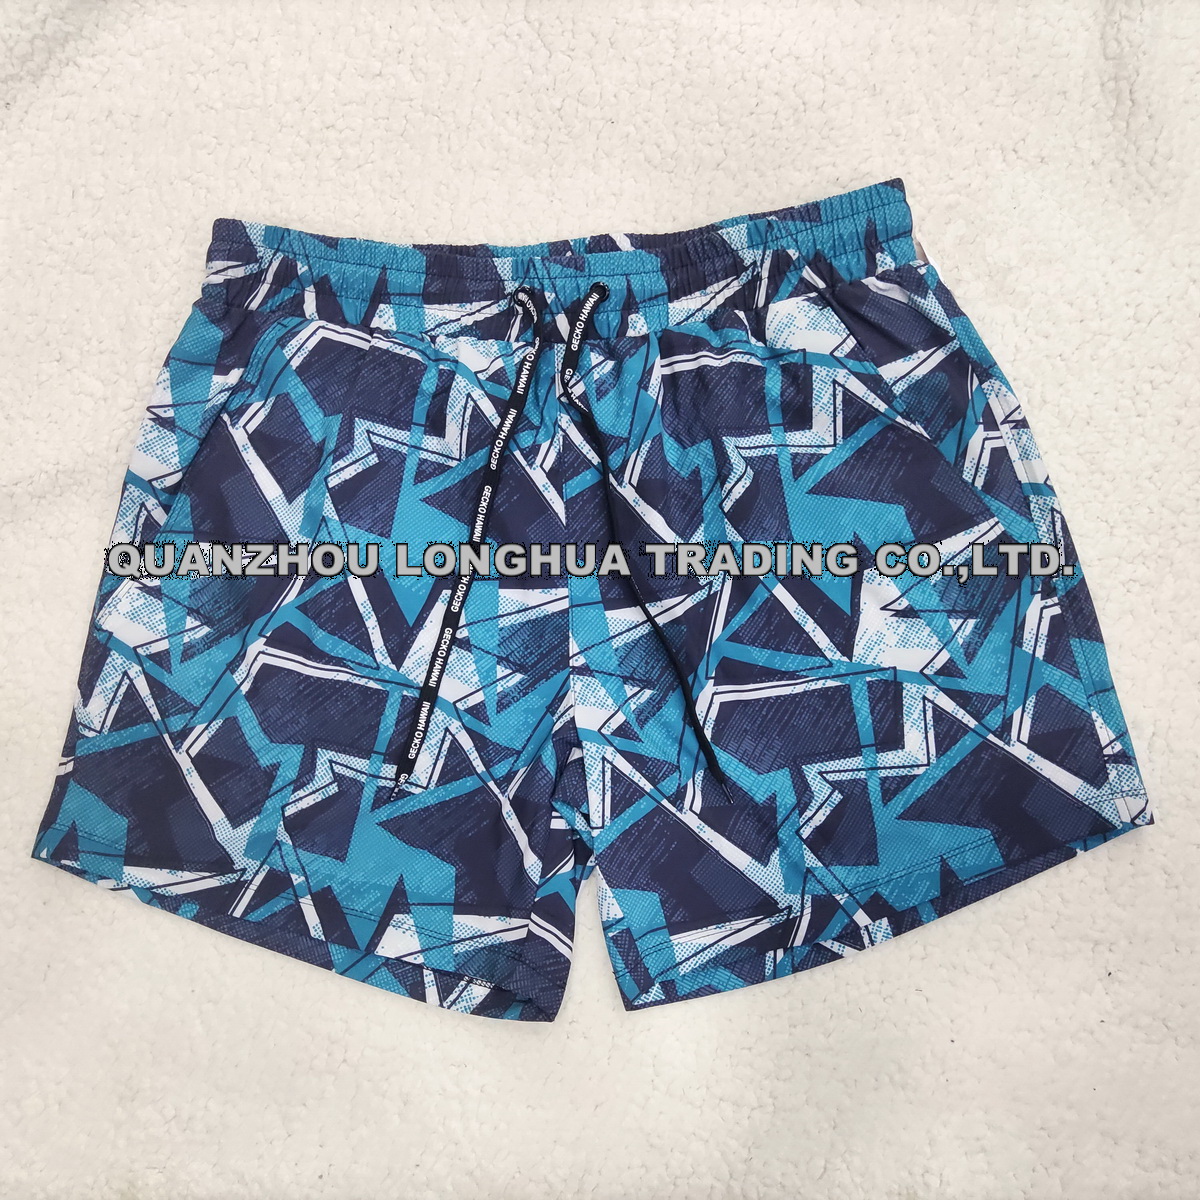 Mens Boys Board Shorts Swim Shorts with Printing Underwear Apparel